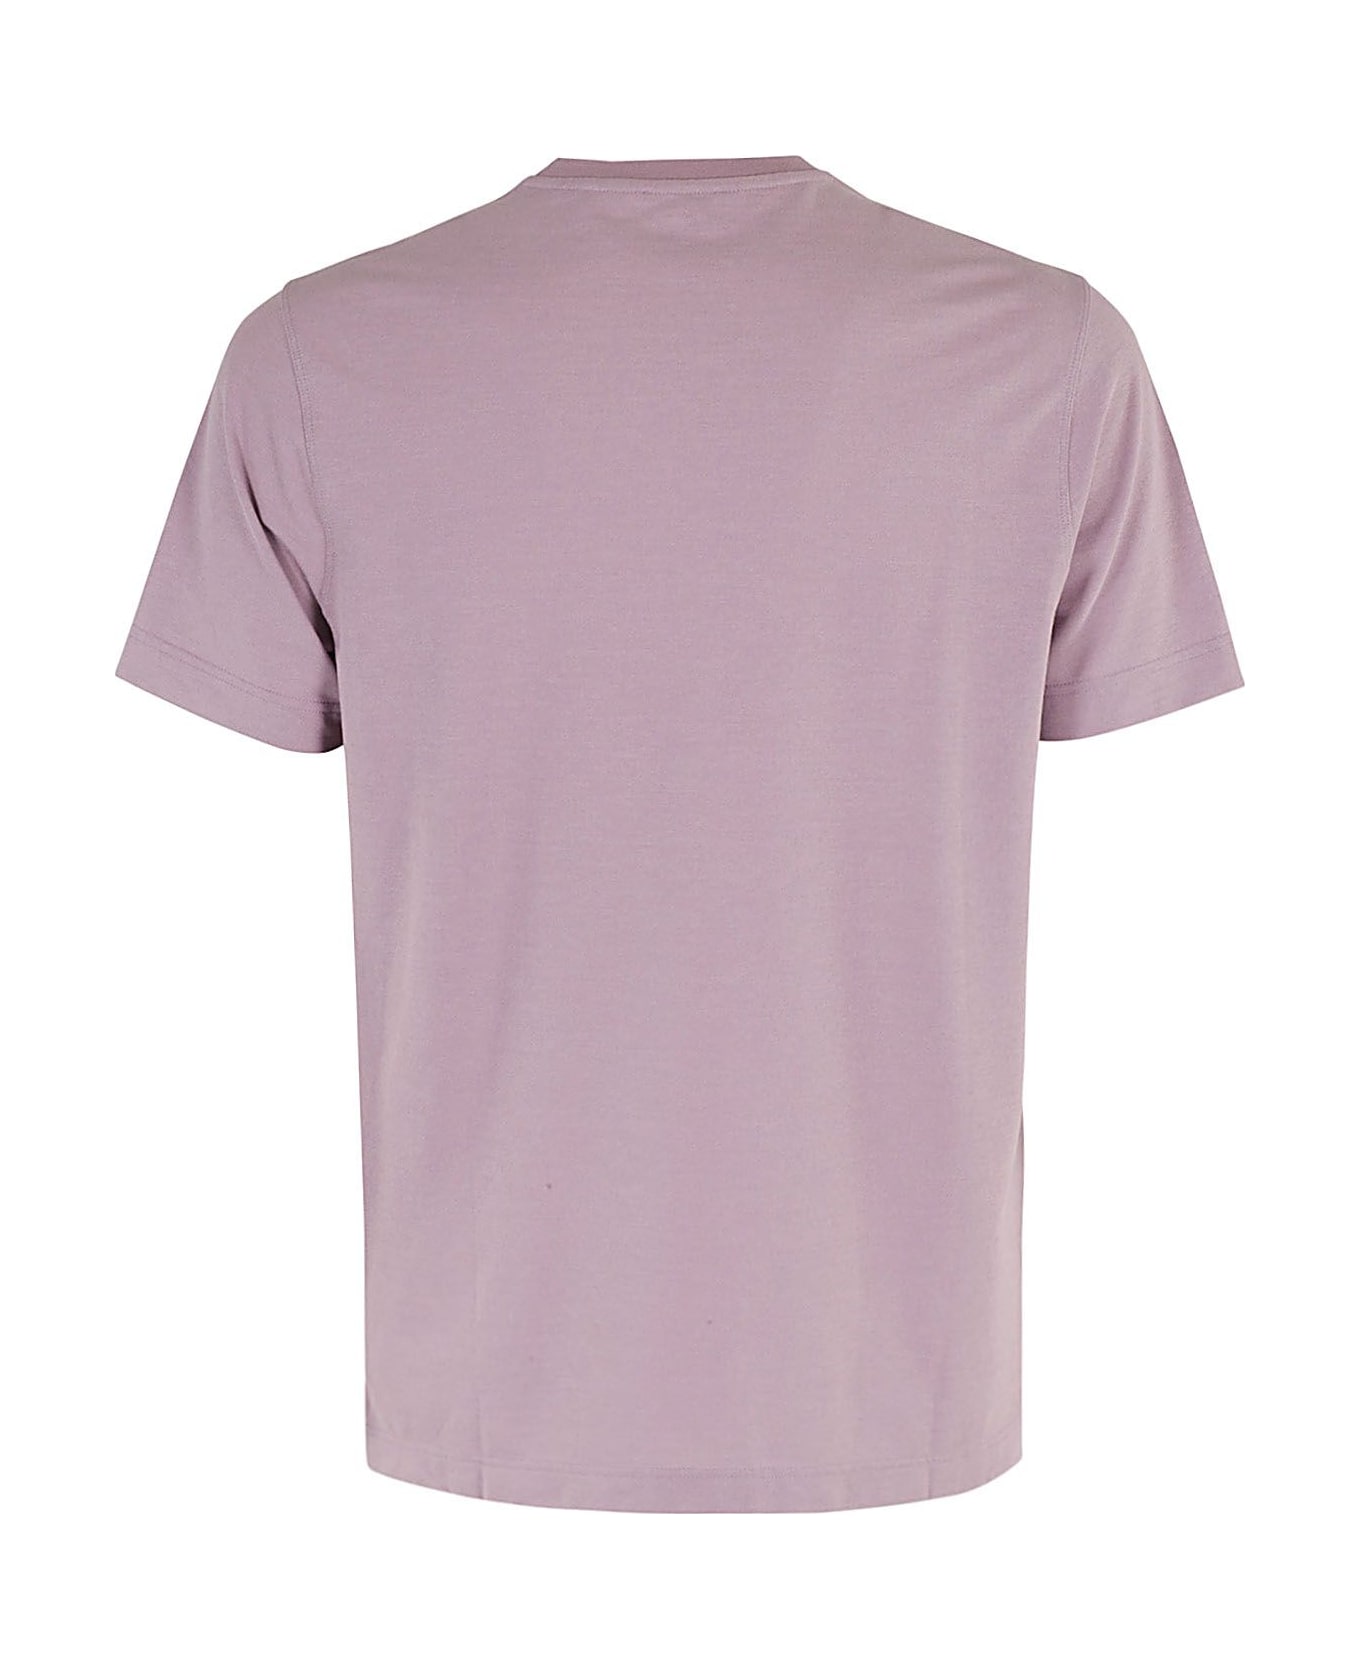 Zanone Tshirt Ice Cotton - Lavender シャツ